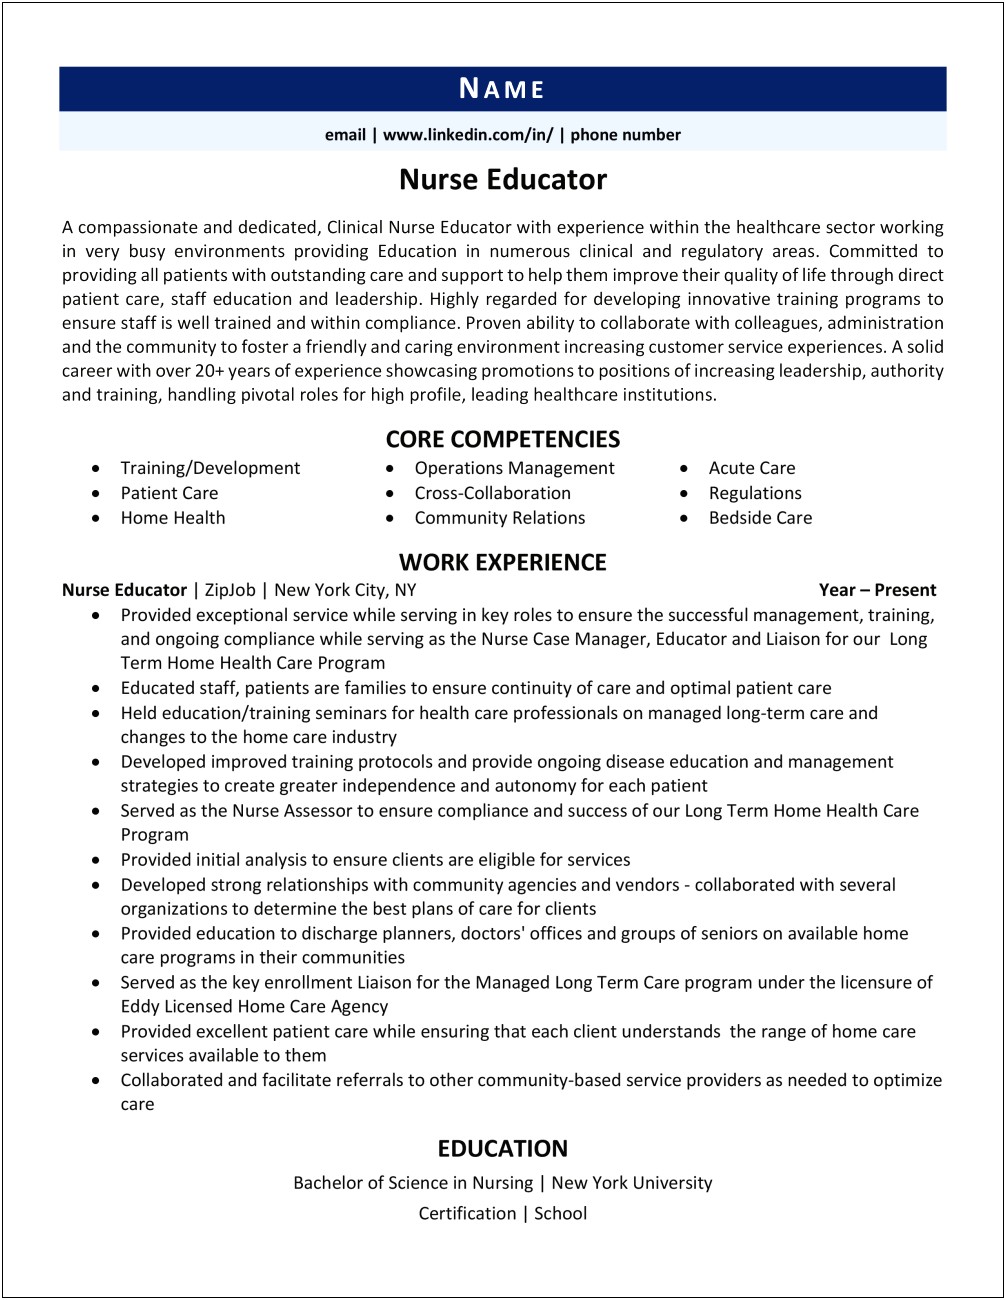 Professional Summary For Nurse Educator Resume